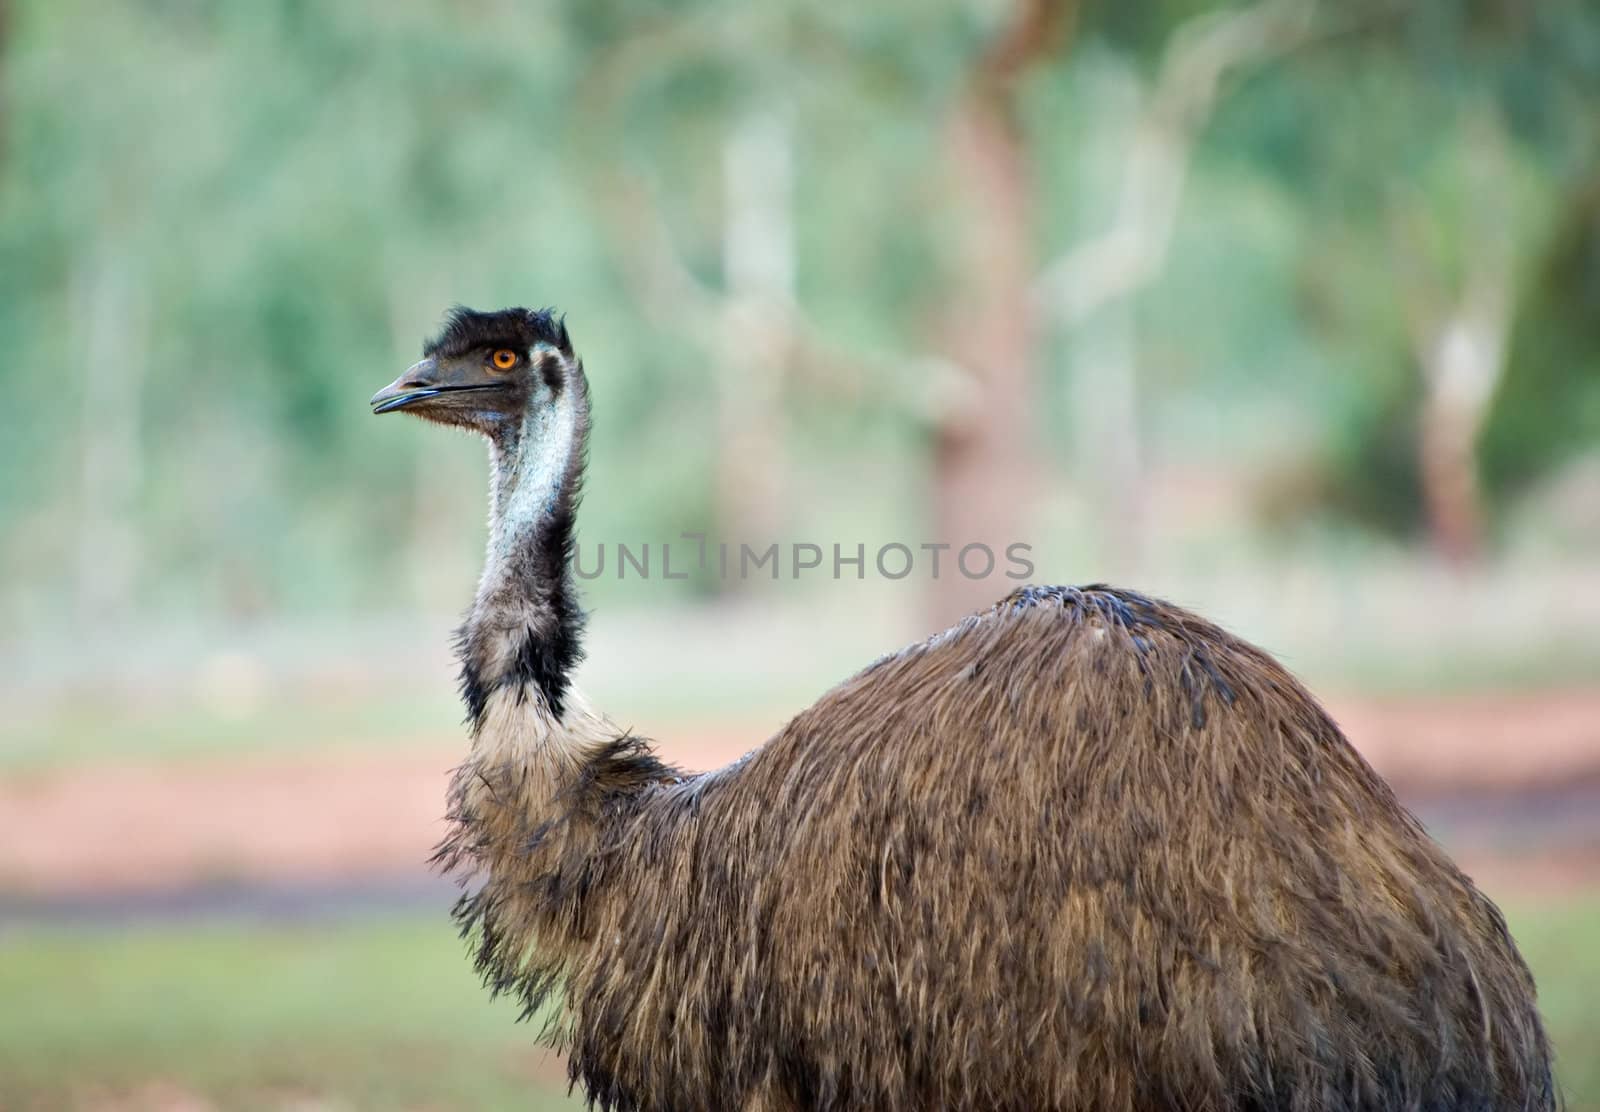 image of an australian flightless emu in a natural setting